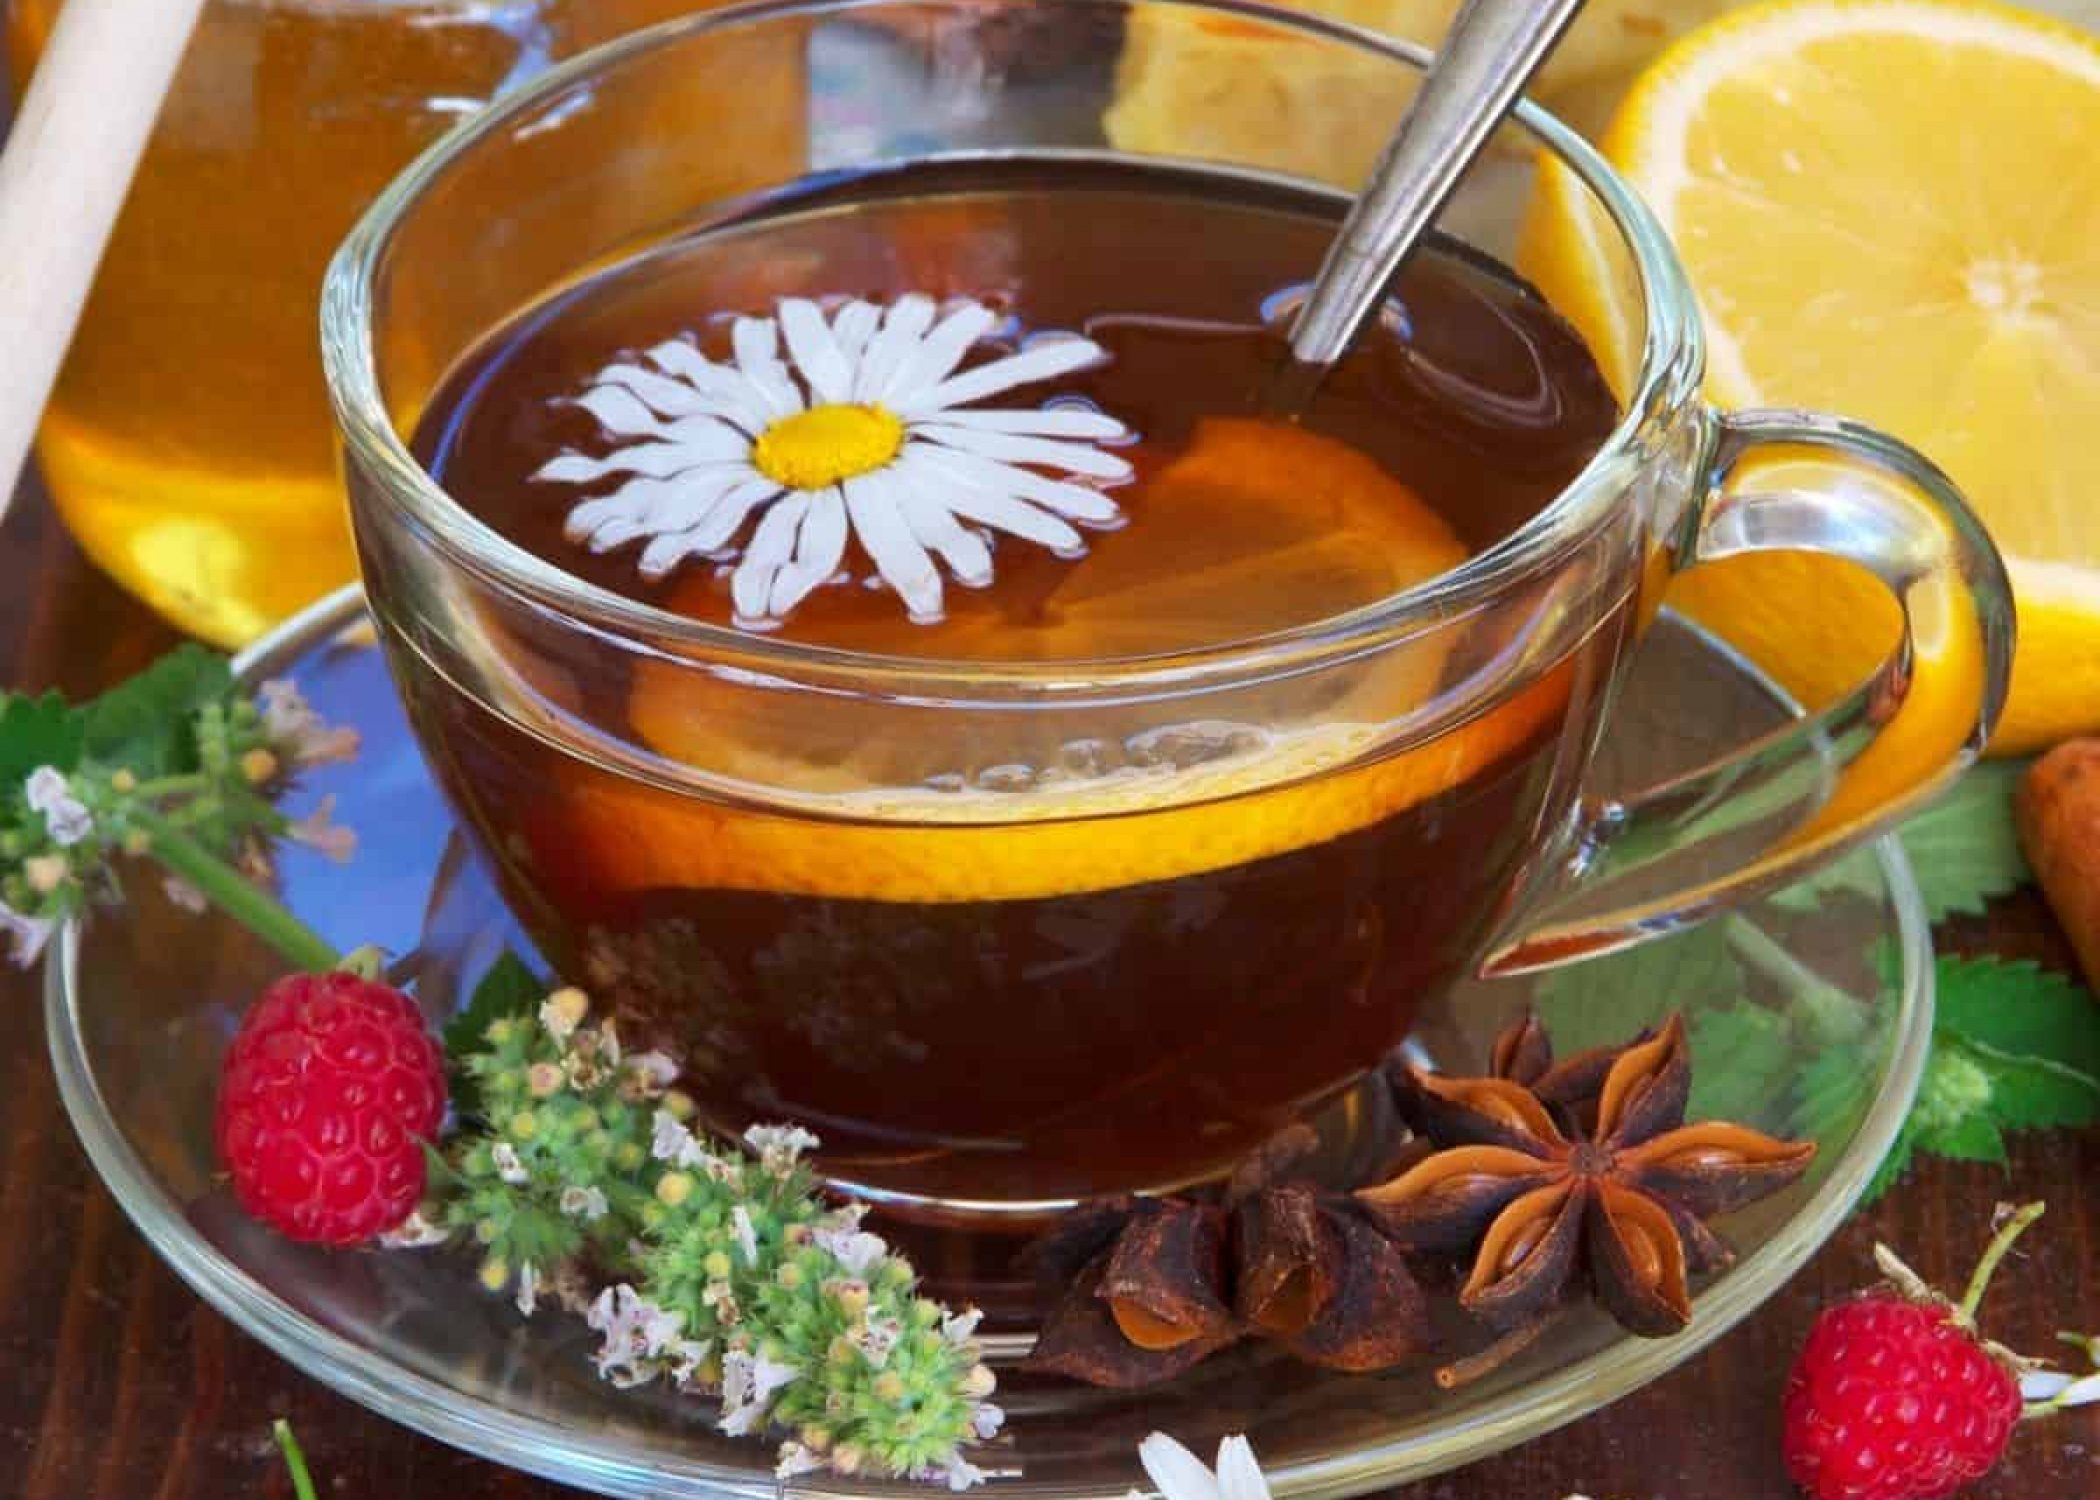 What Are Flavonoids in Tea?